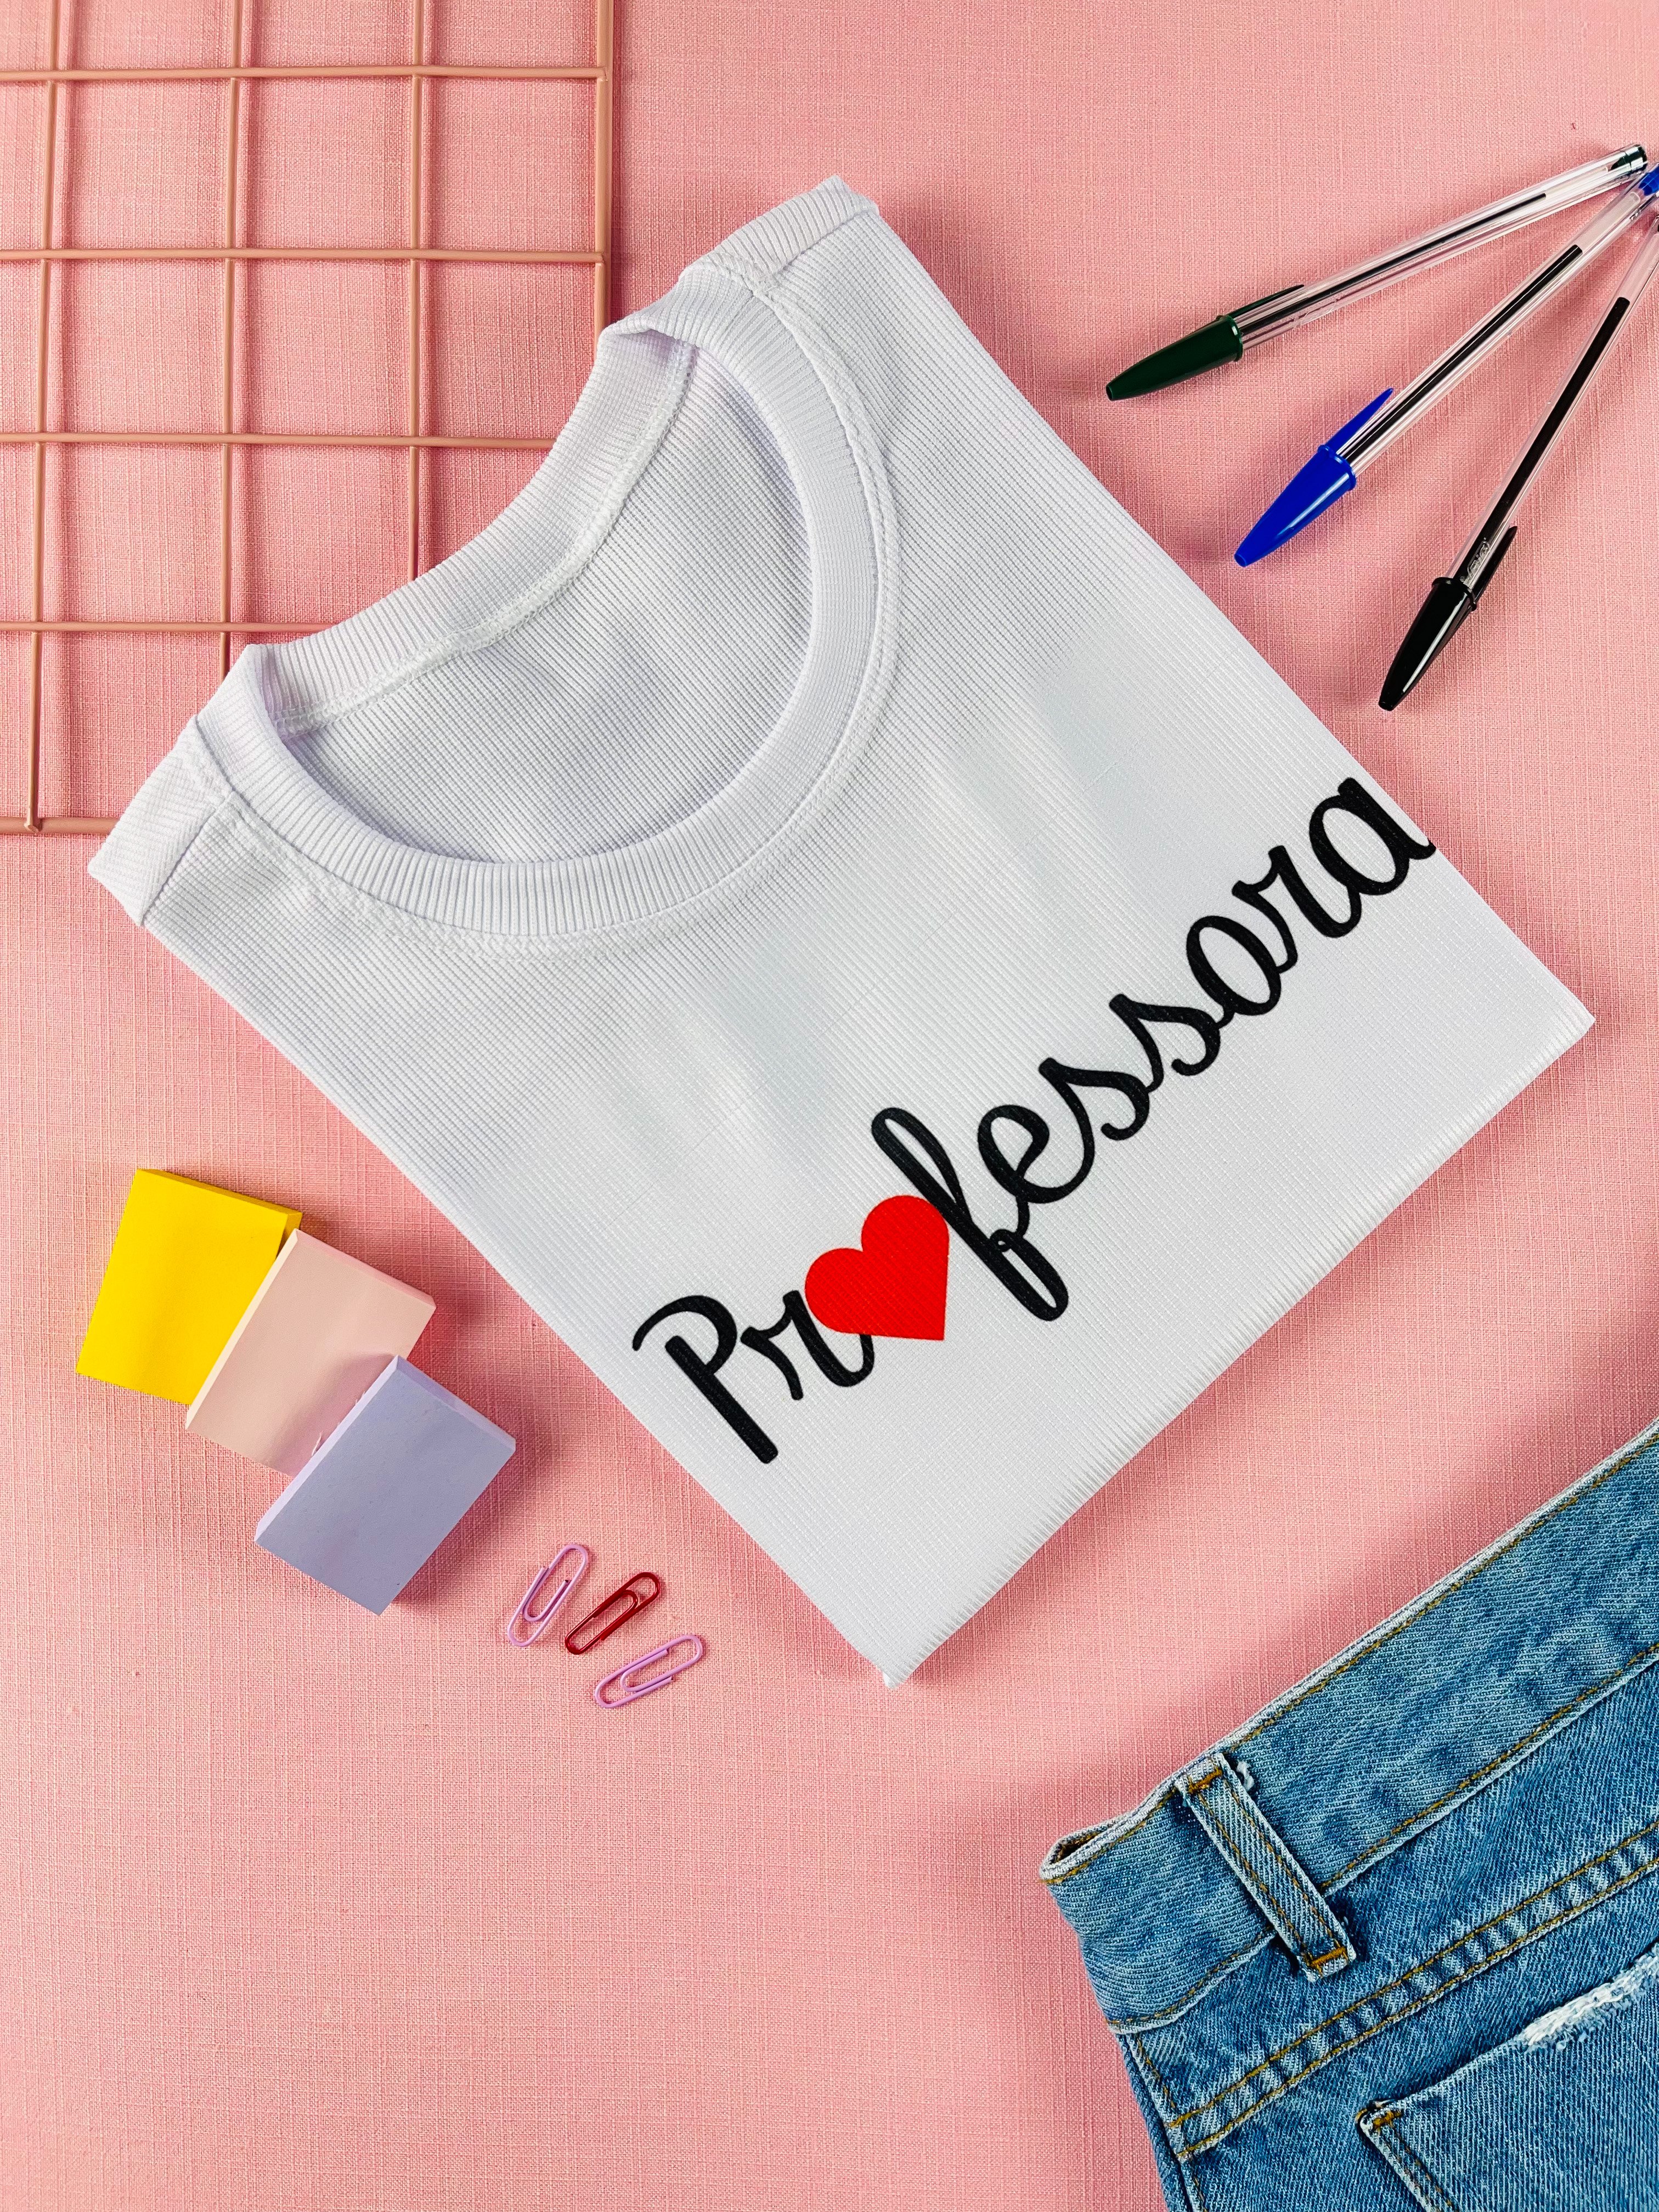 T-SHIRT PROFESSORA - ROSA PINK, Atacado Tshirt